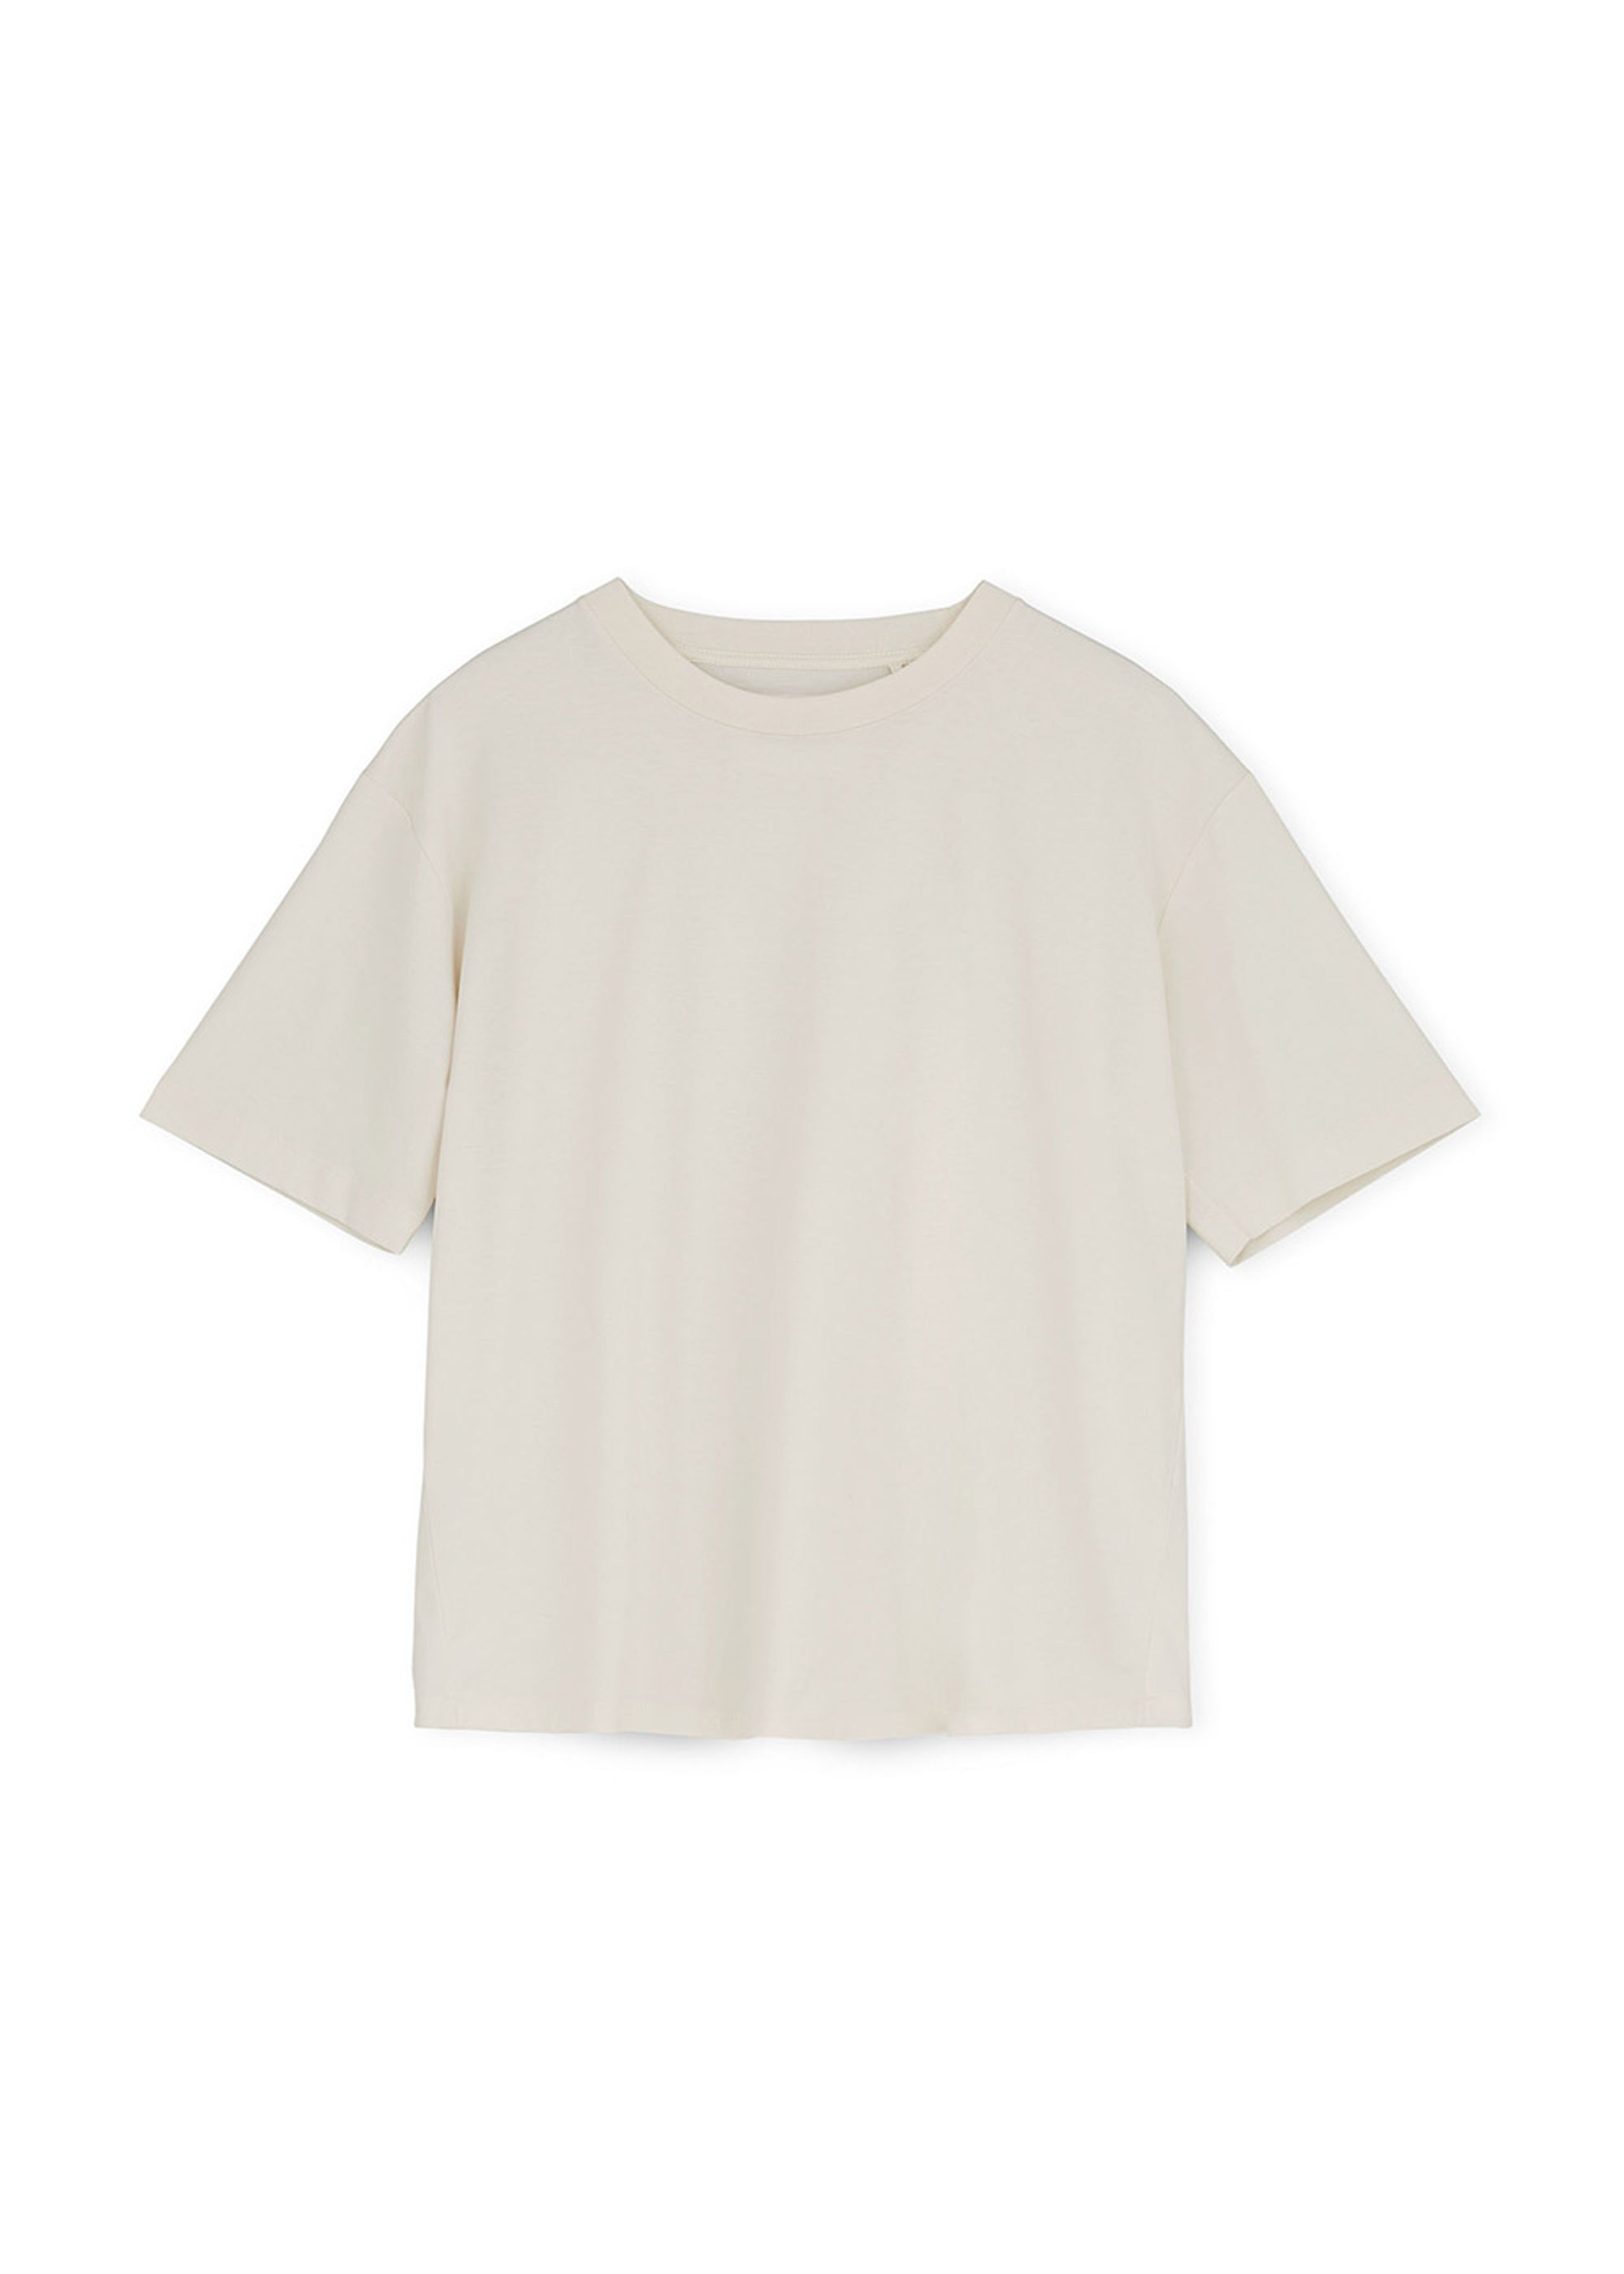 Aiayu - T-Shirt - Light Oversize Tee - Pure Ecru